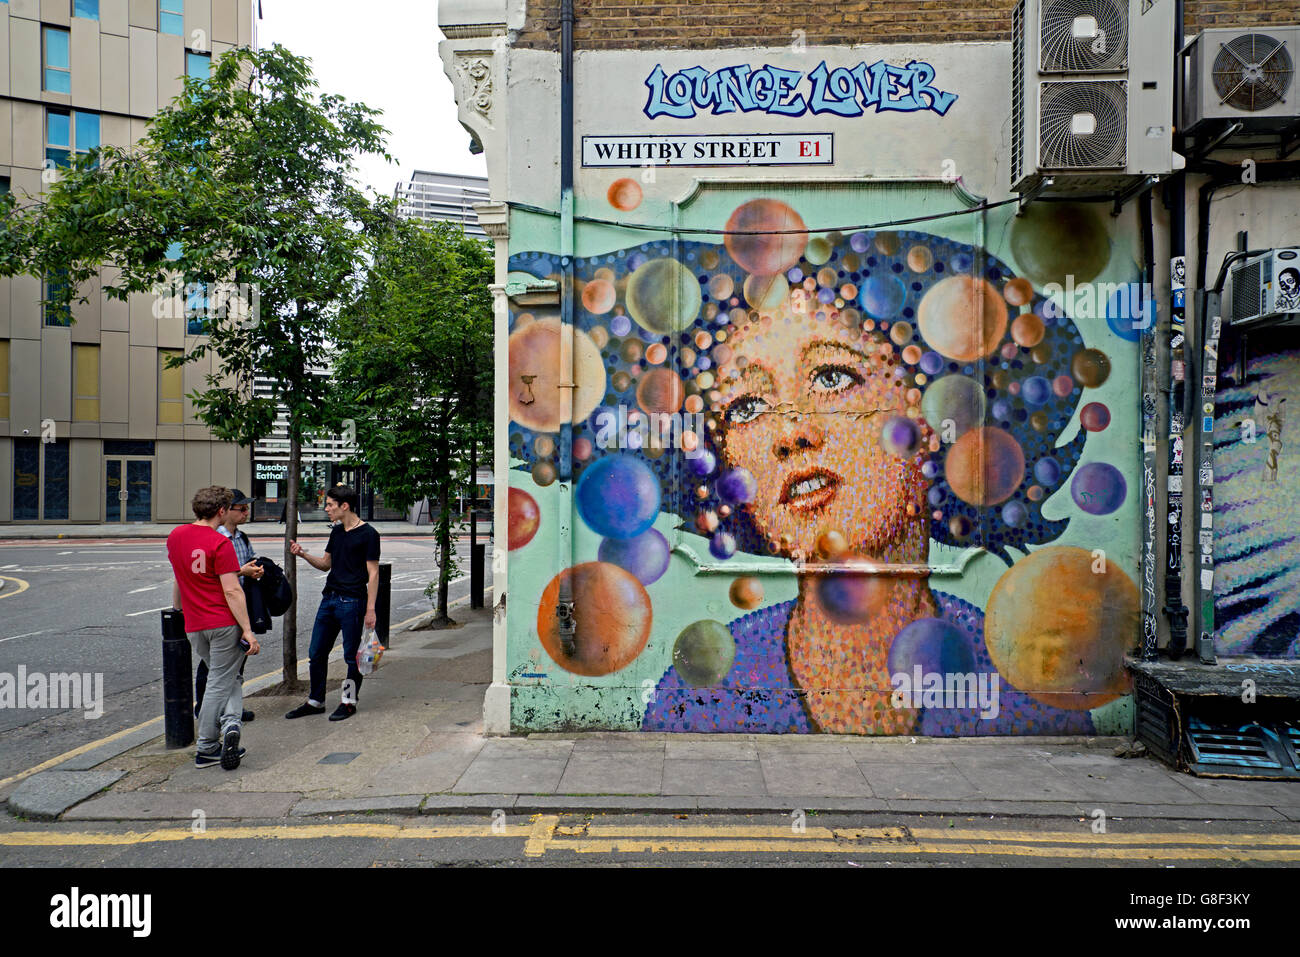 'Lounge Lover' by street artist  James Cochran  in Whitby Street, Shoreditch, East London, UK. Stock Photo